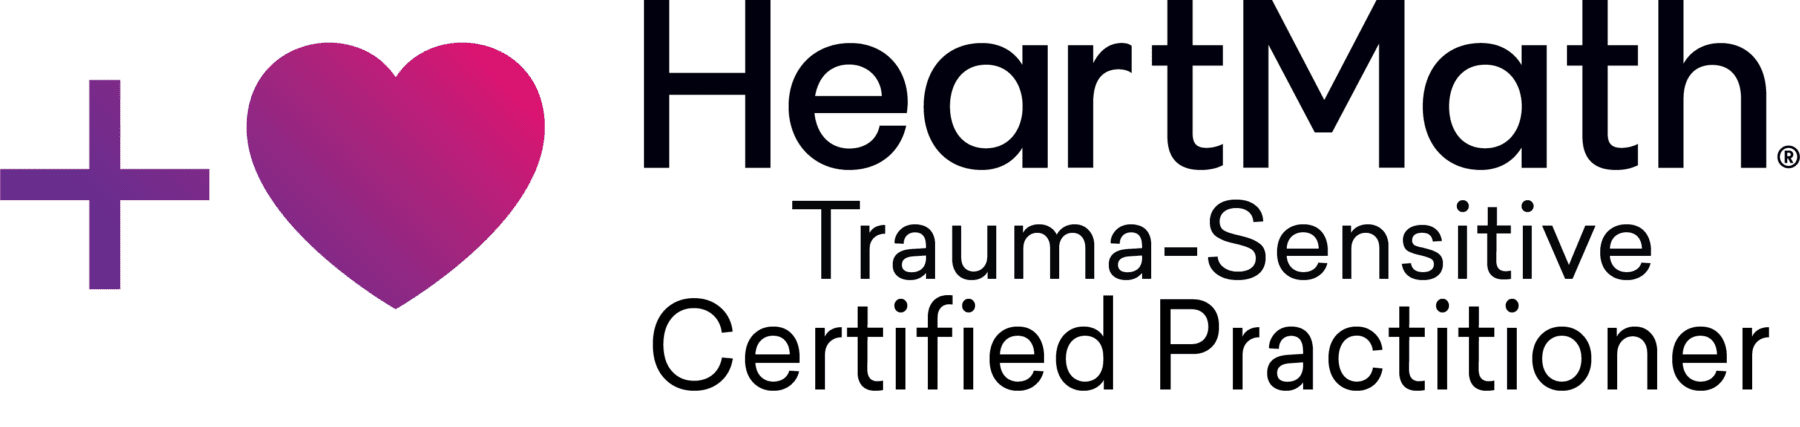 TRH-Trauma-Sensitive-Logo.png